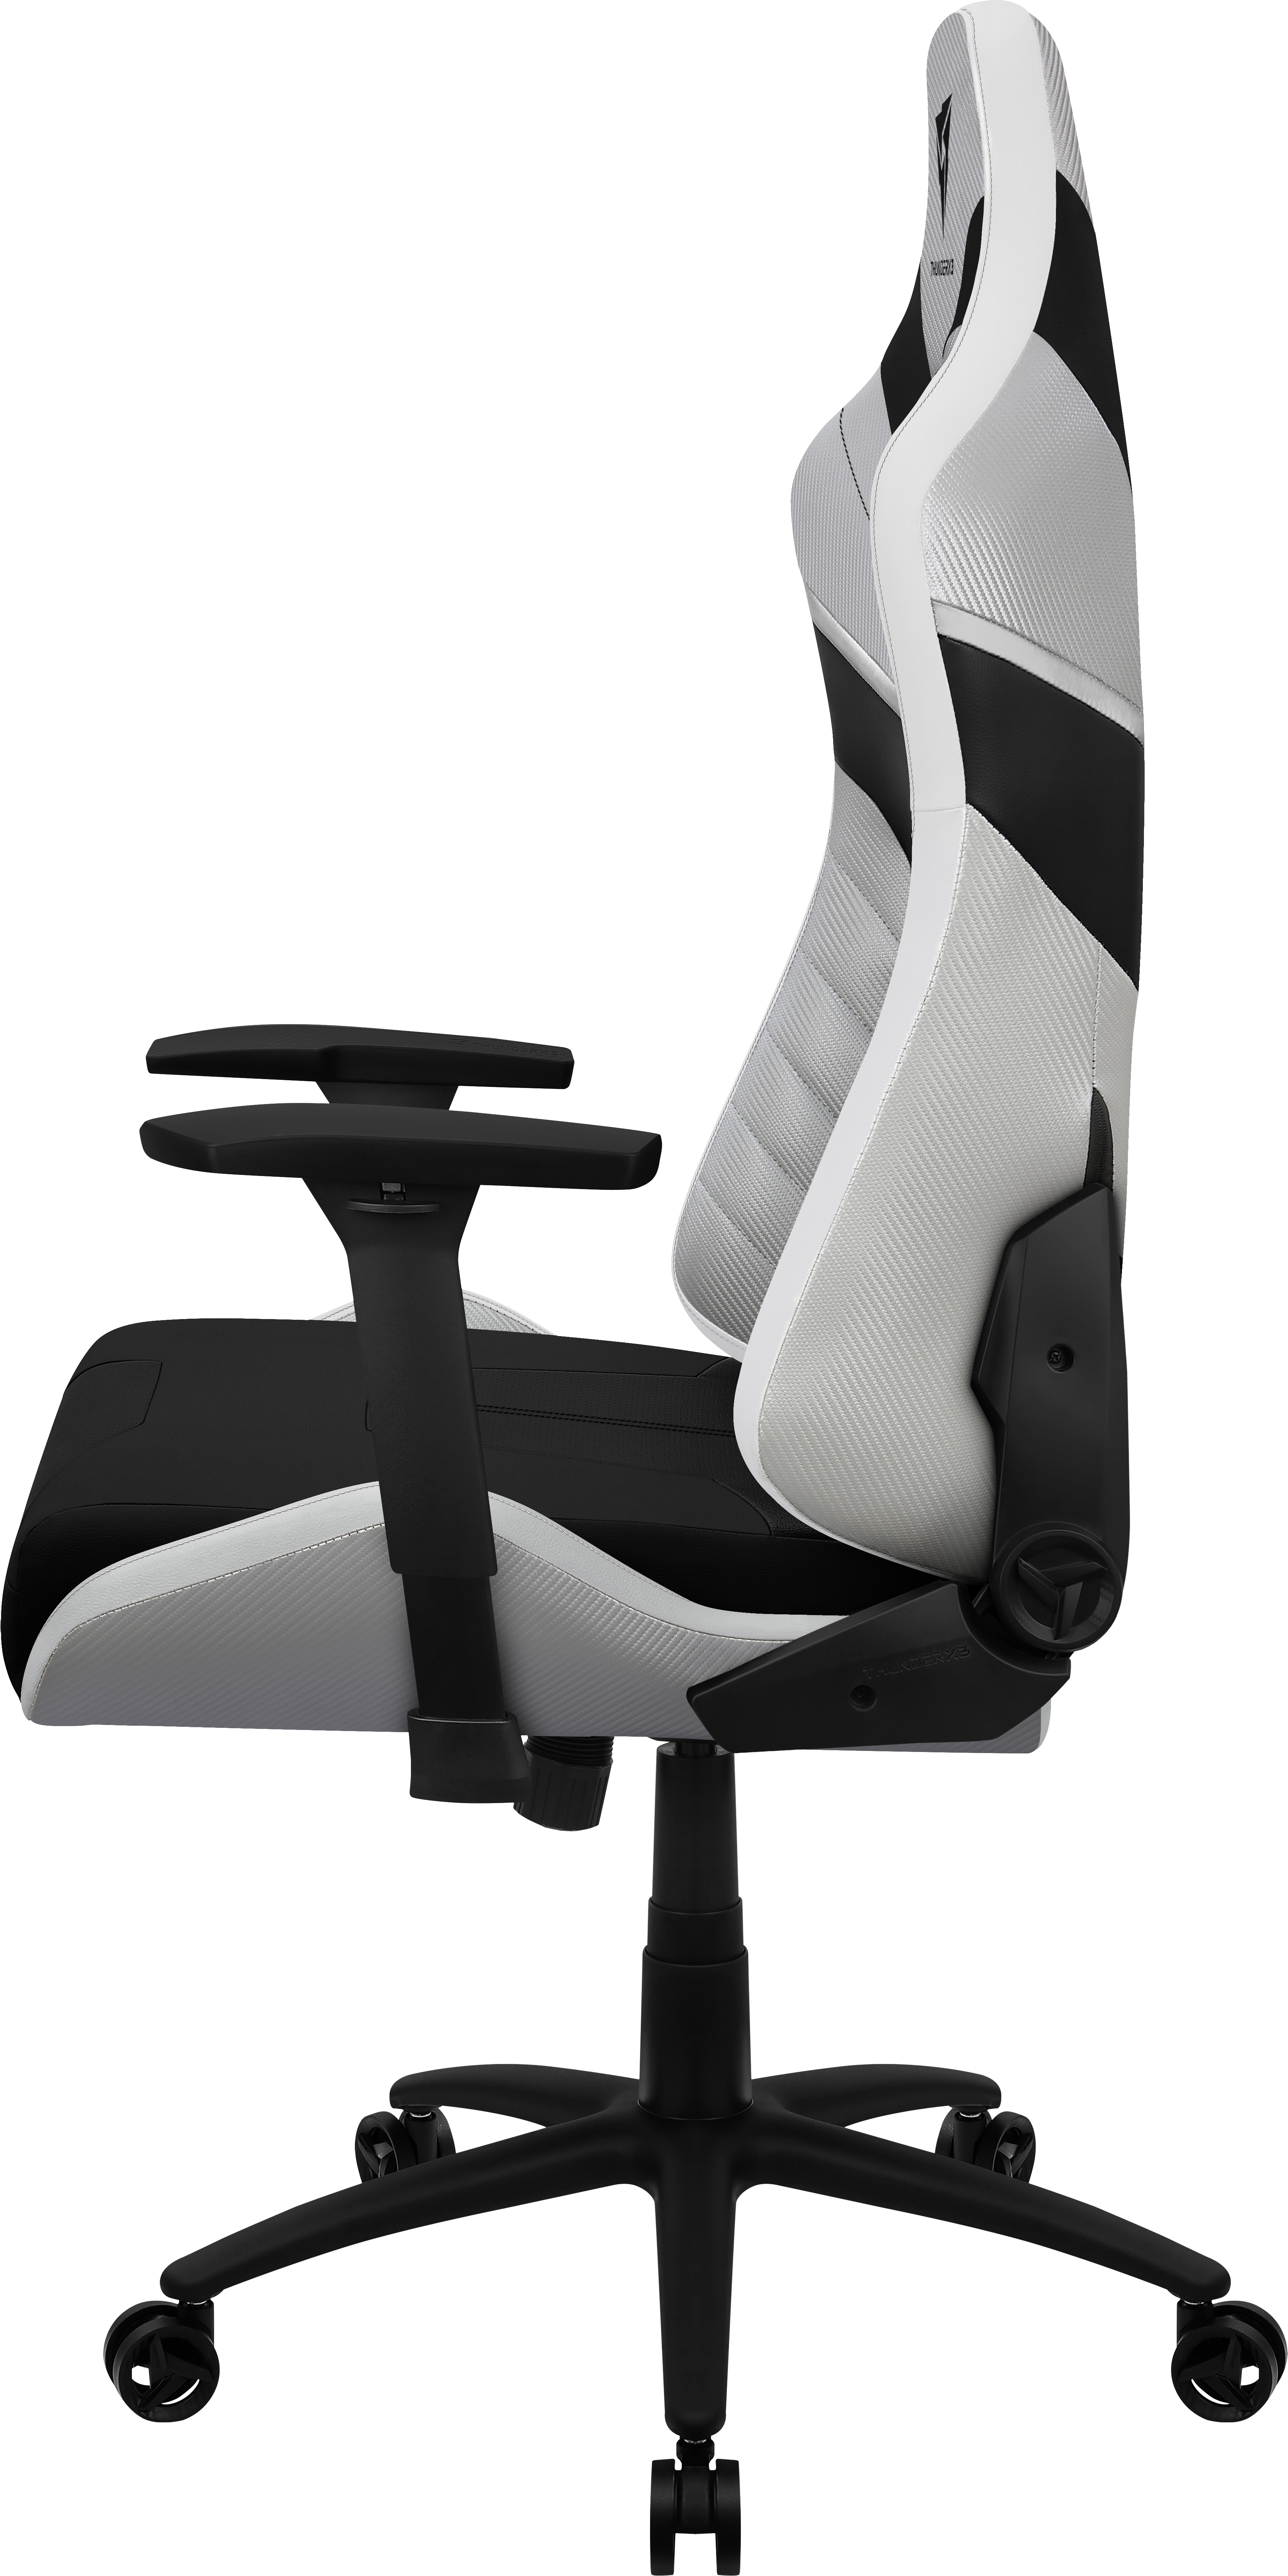 ThunderX3 - ThunderX3 TC5 MAX Gaming Chair - All White